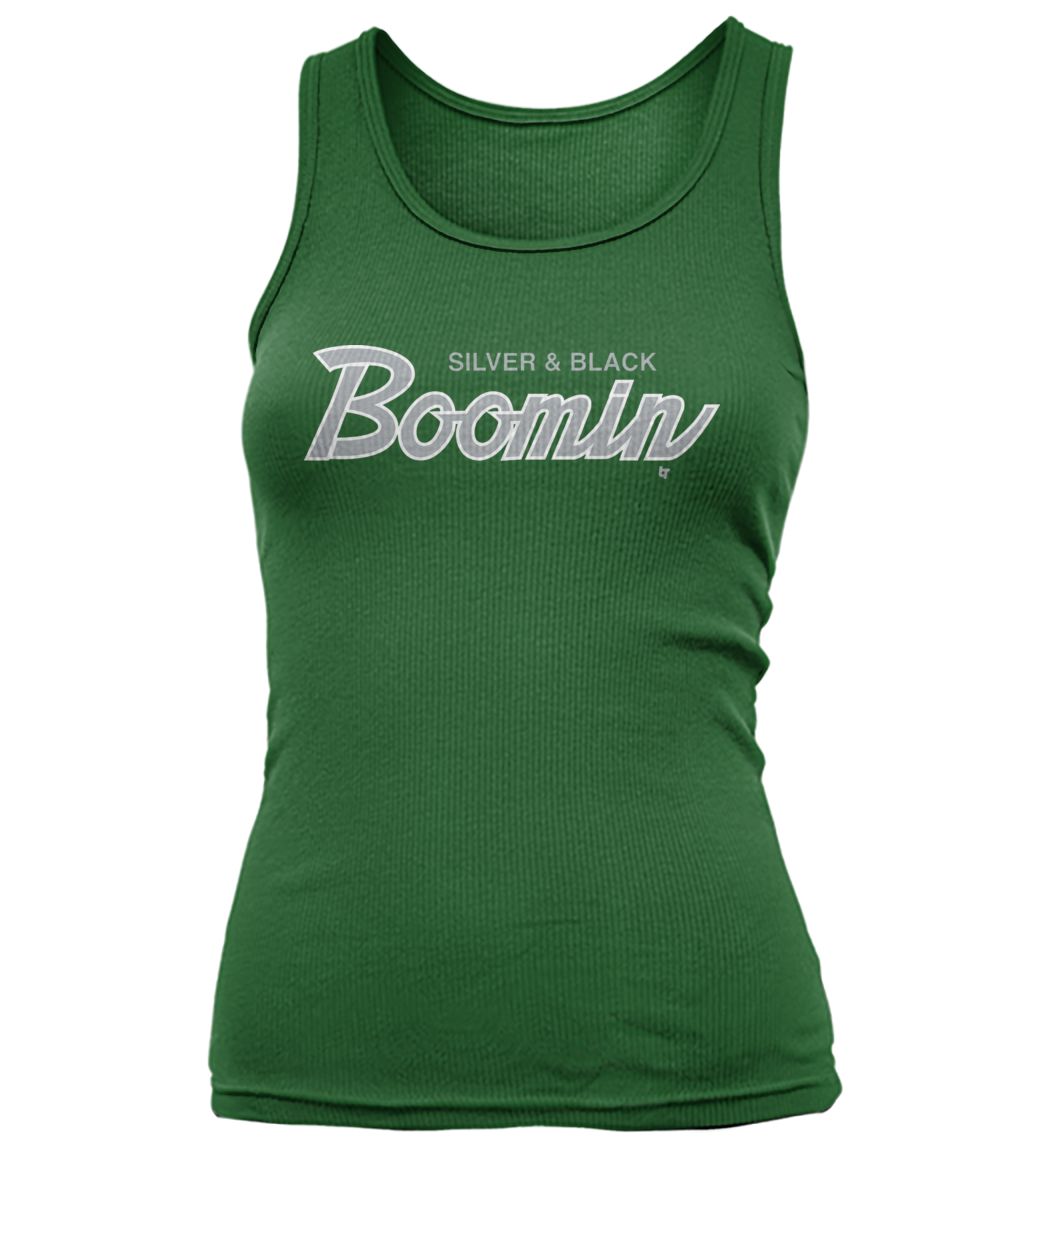 The silver & black boomin era has begun with new antonio brown women's tank top